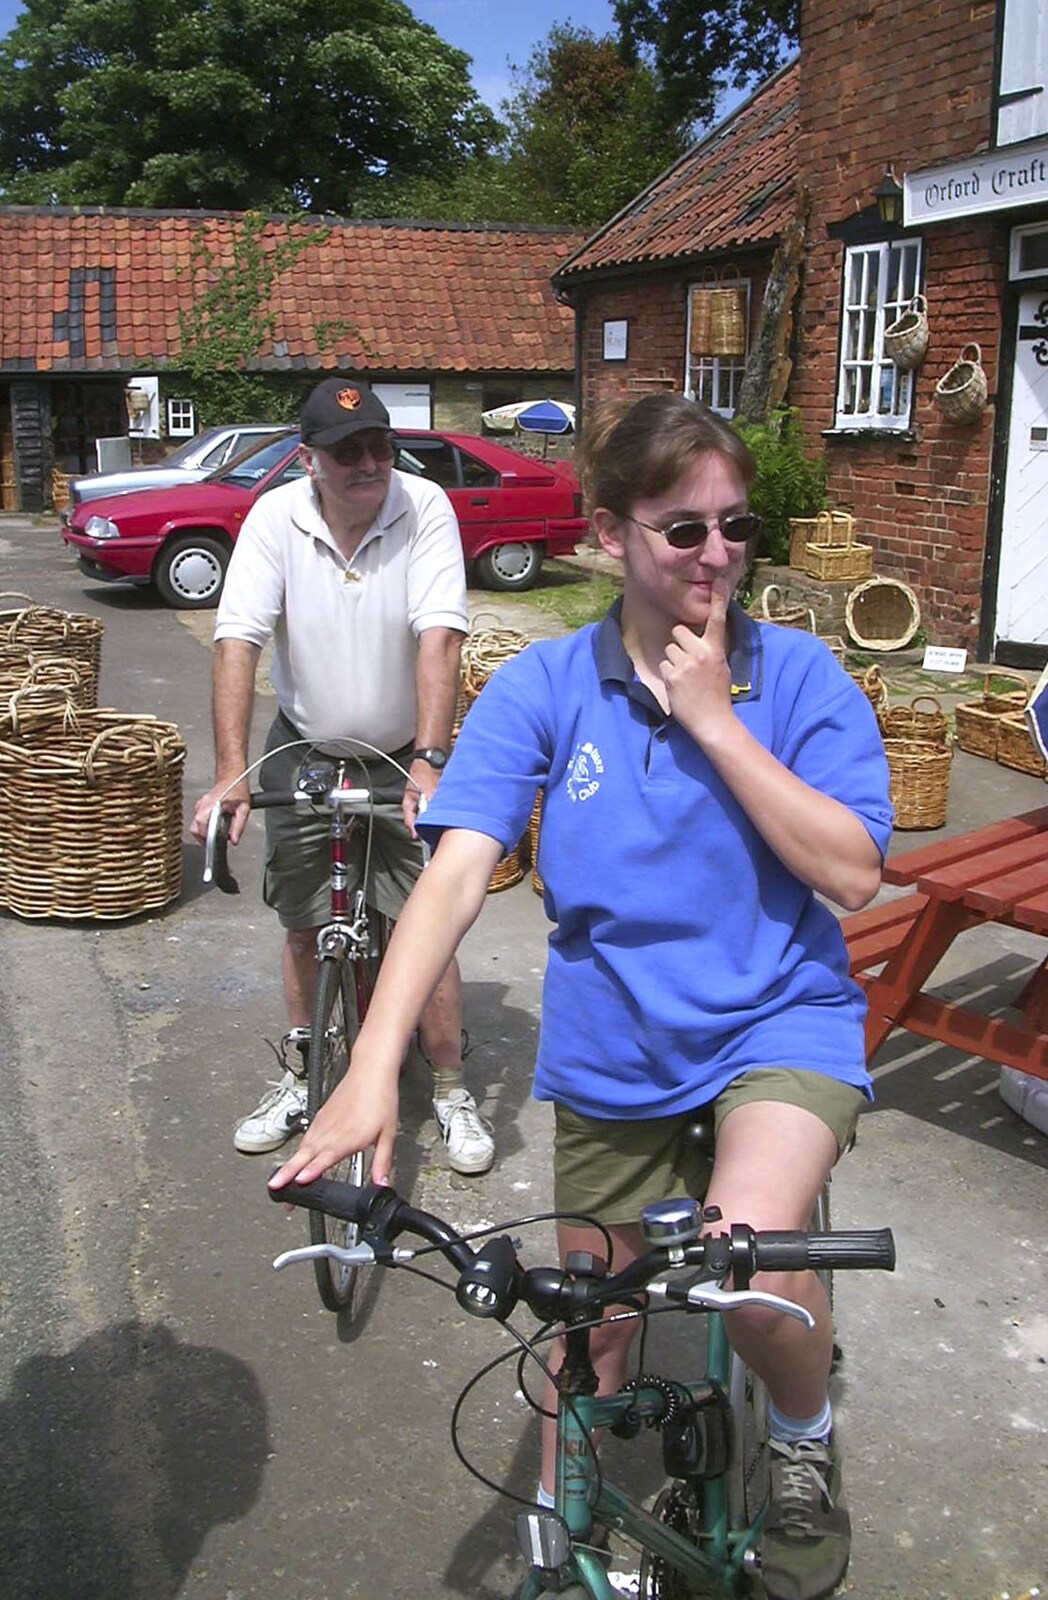 The BSCC Annual Bike Ride, Orford, Suffolk - 12th July 2003: Sue looks bashful